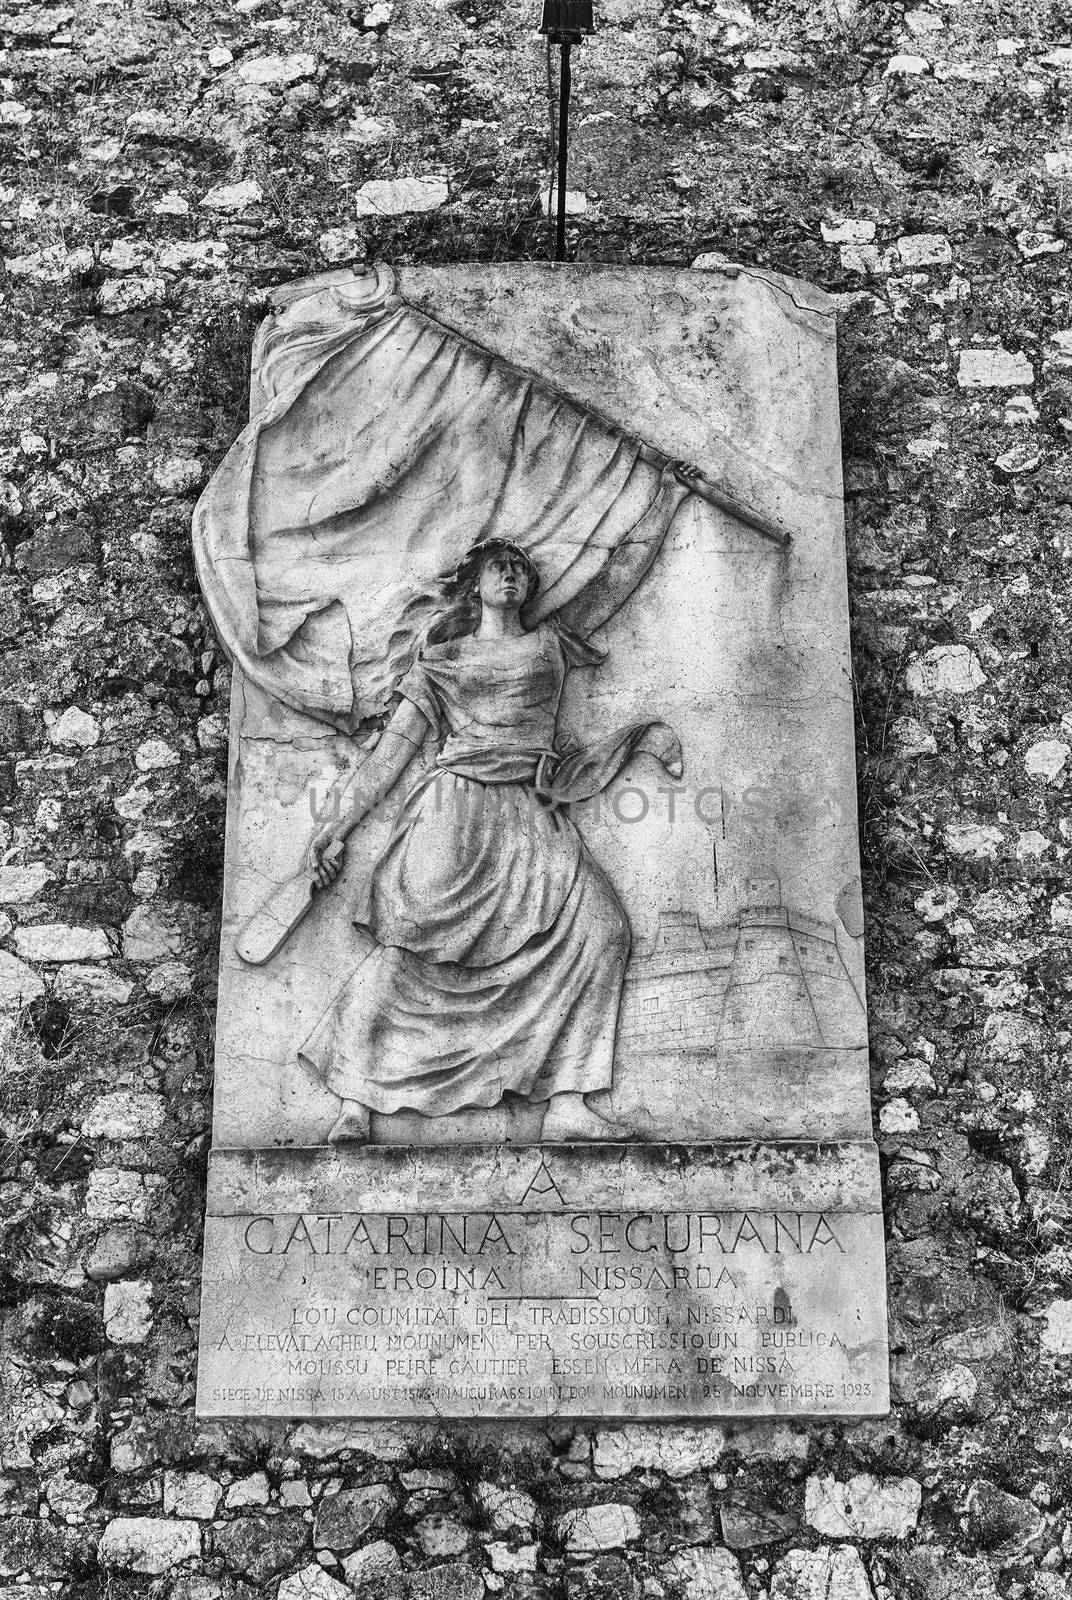 Memorial in bas-relief dedicated to Catherine Ségurane, a folk heroine of the city of Nice, France